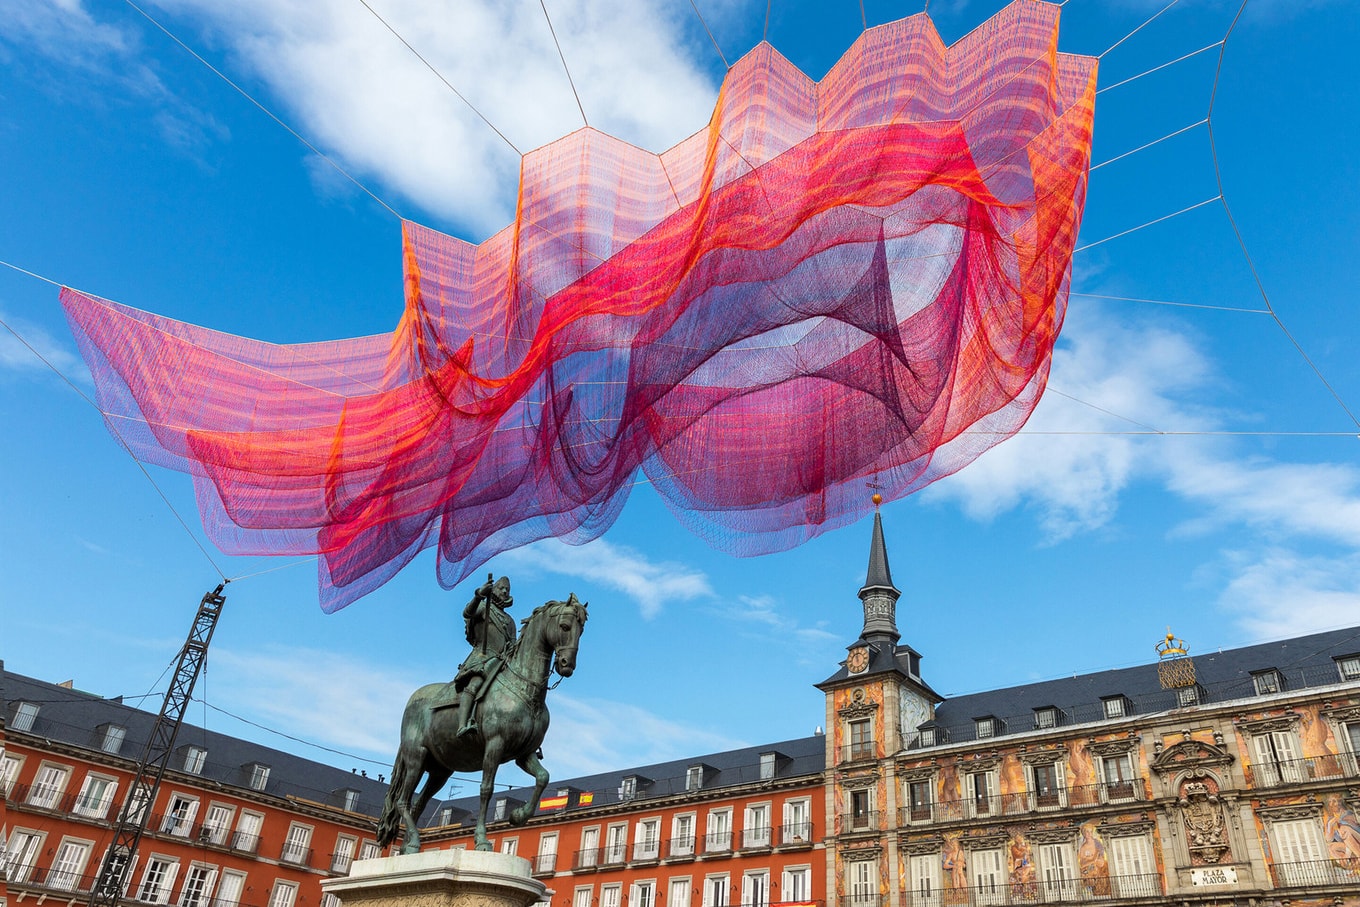 Janet Echelman Time Inspired 178 Madrid Thread Sculpture 2018 february 400 anniversary spain